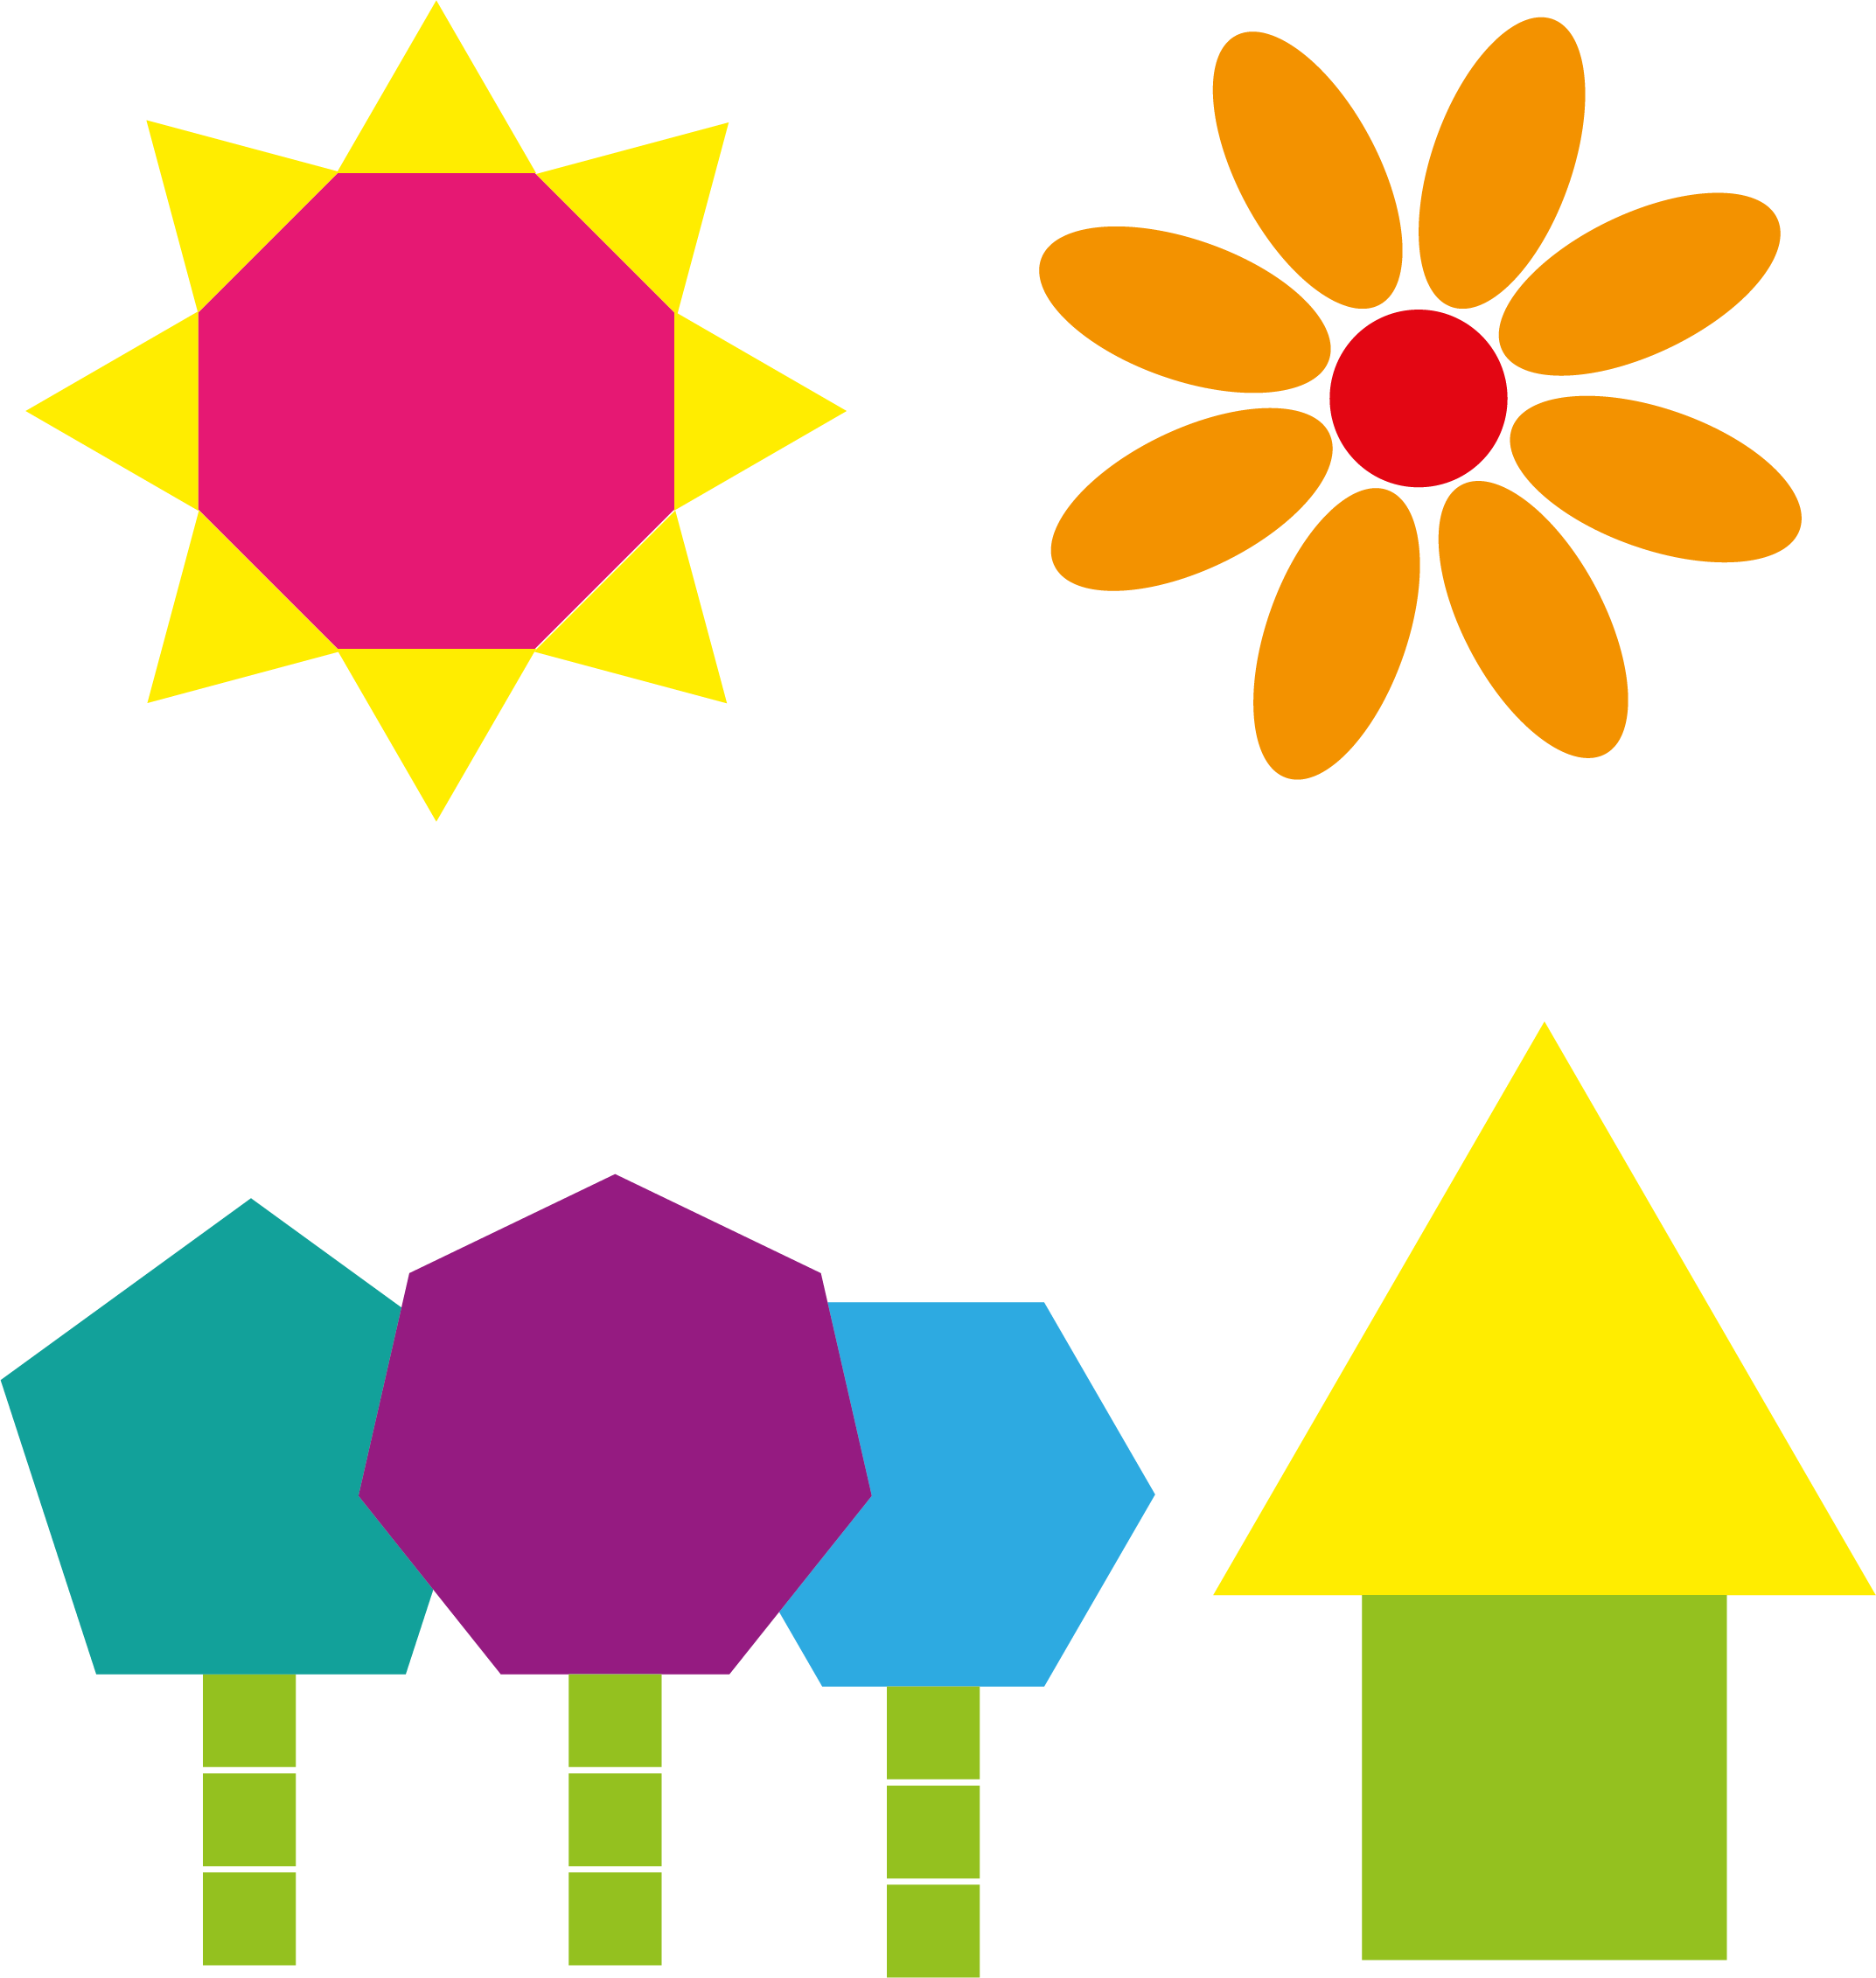 En sol, en blomst, tre trær og et hus som sammensatte former